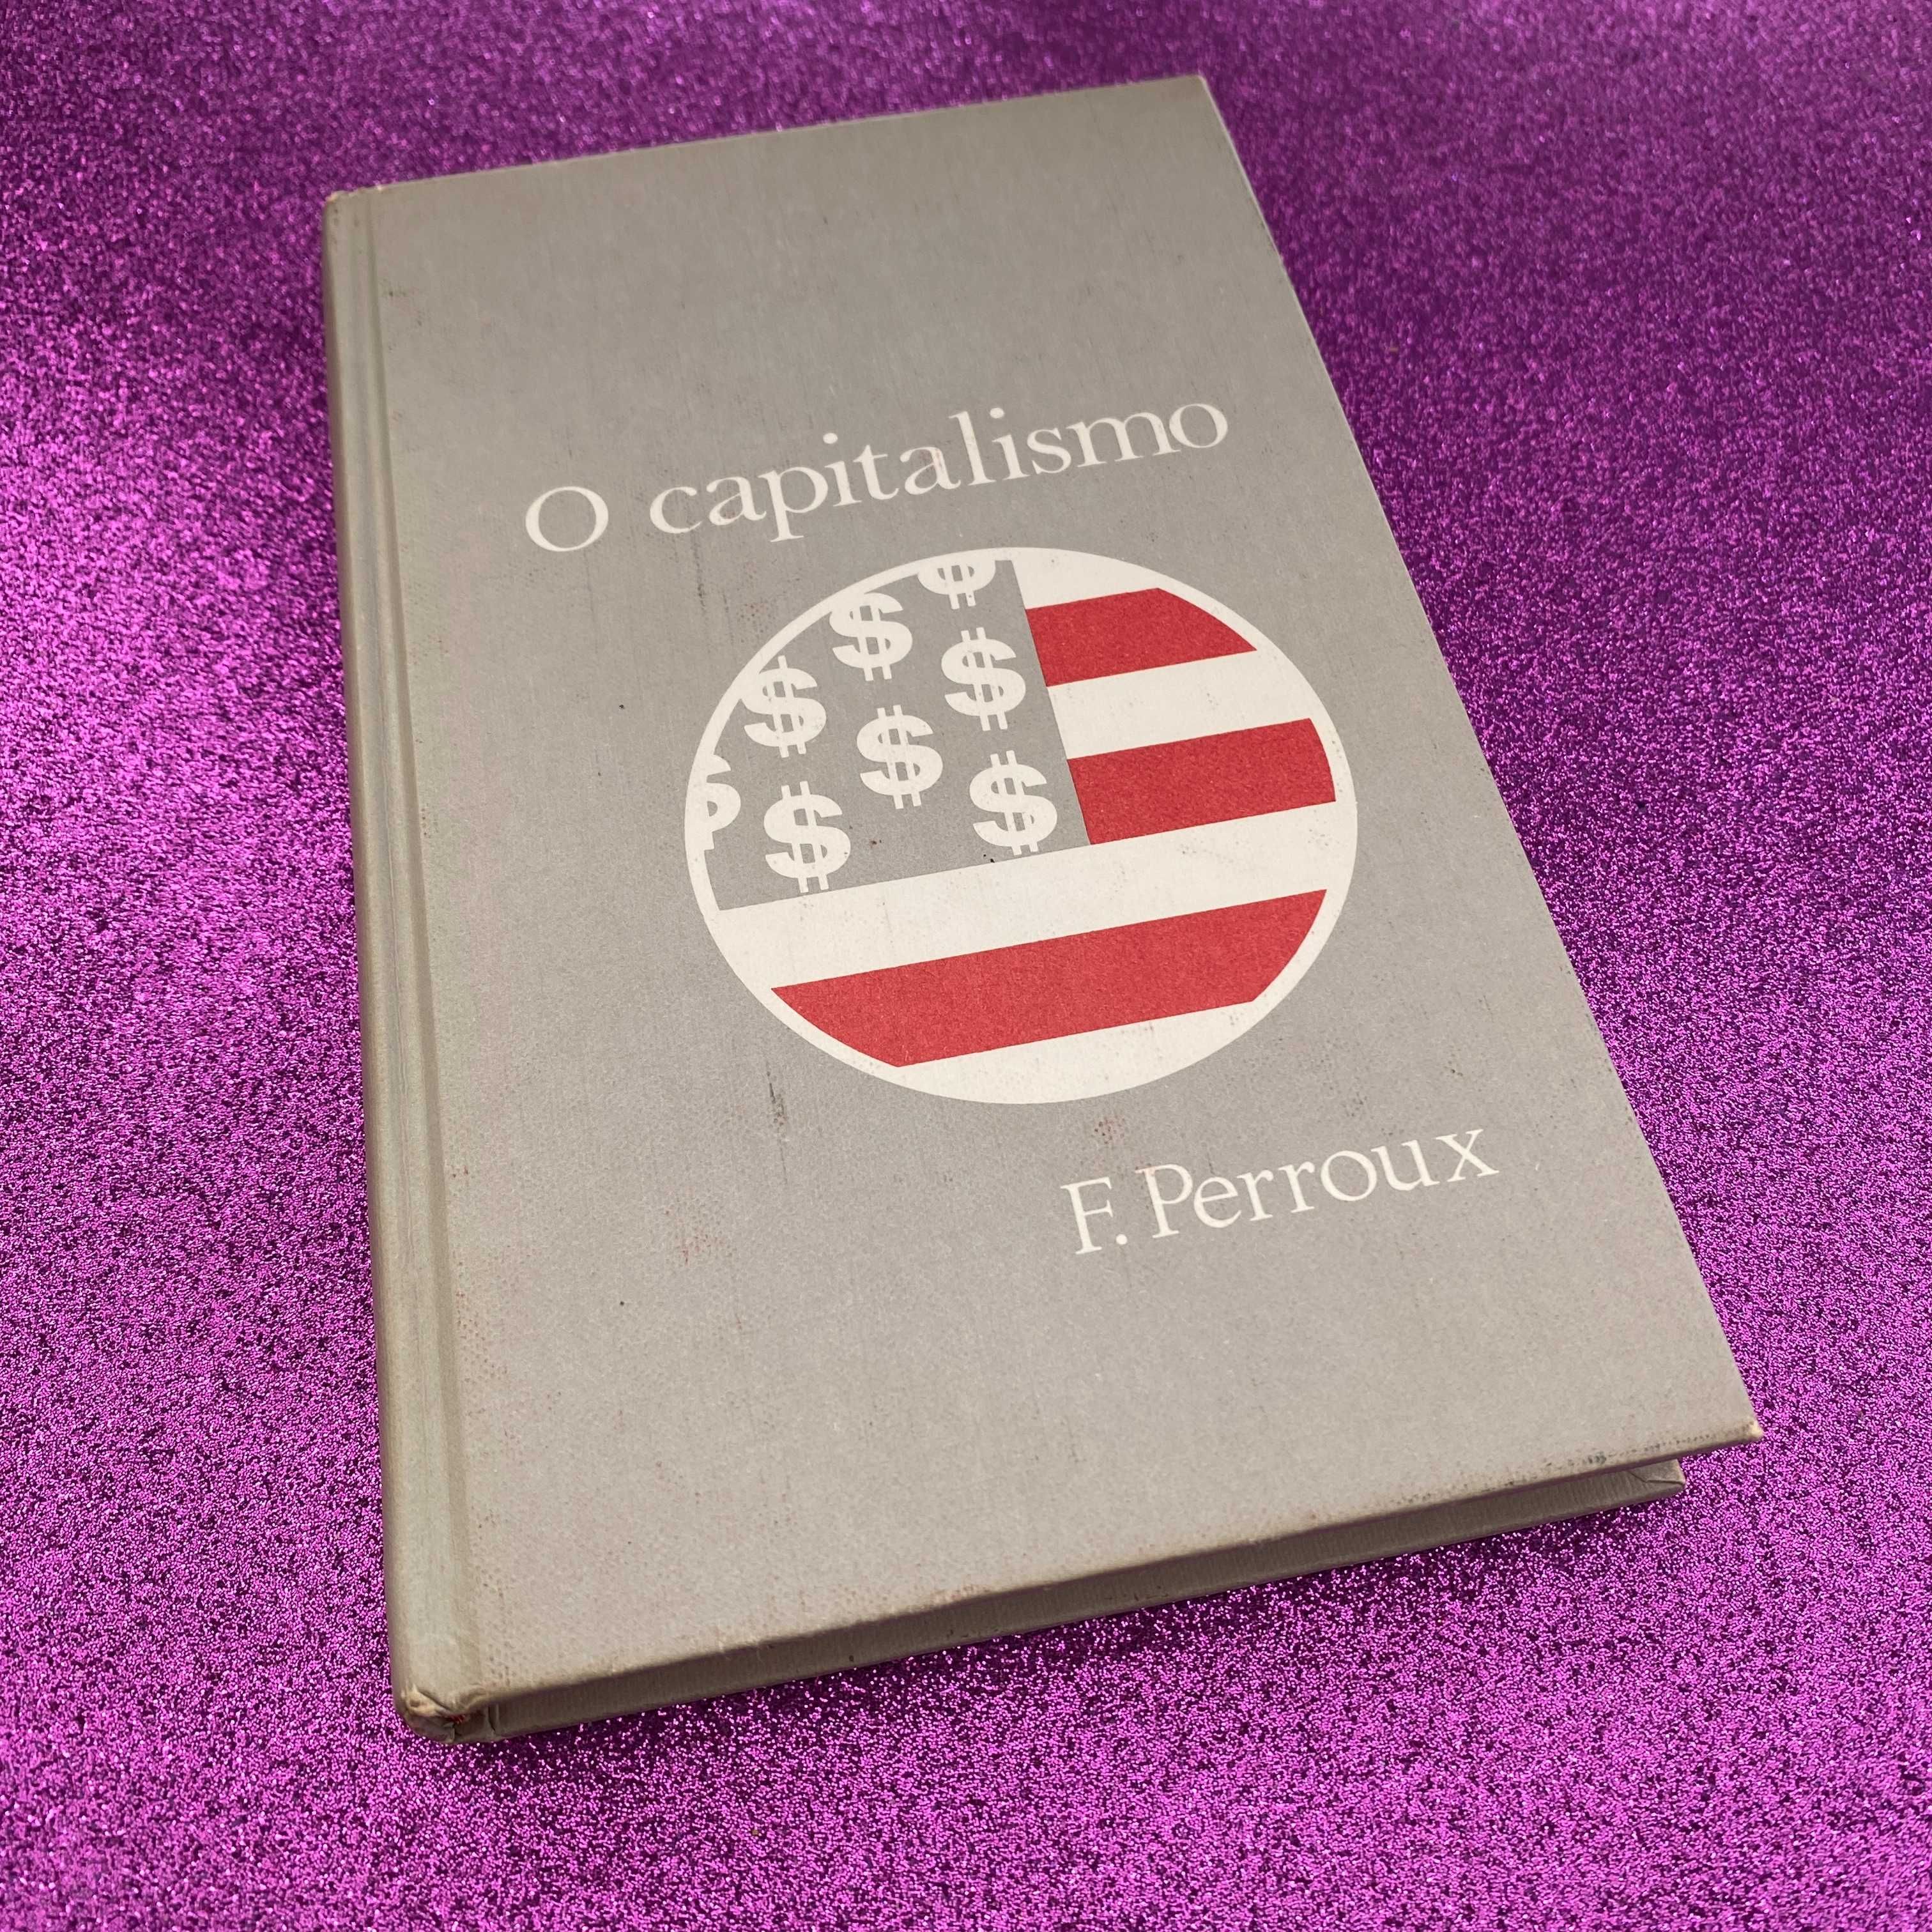 O capitalismo Autor: F. Perroux